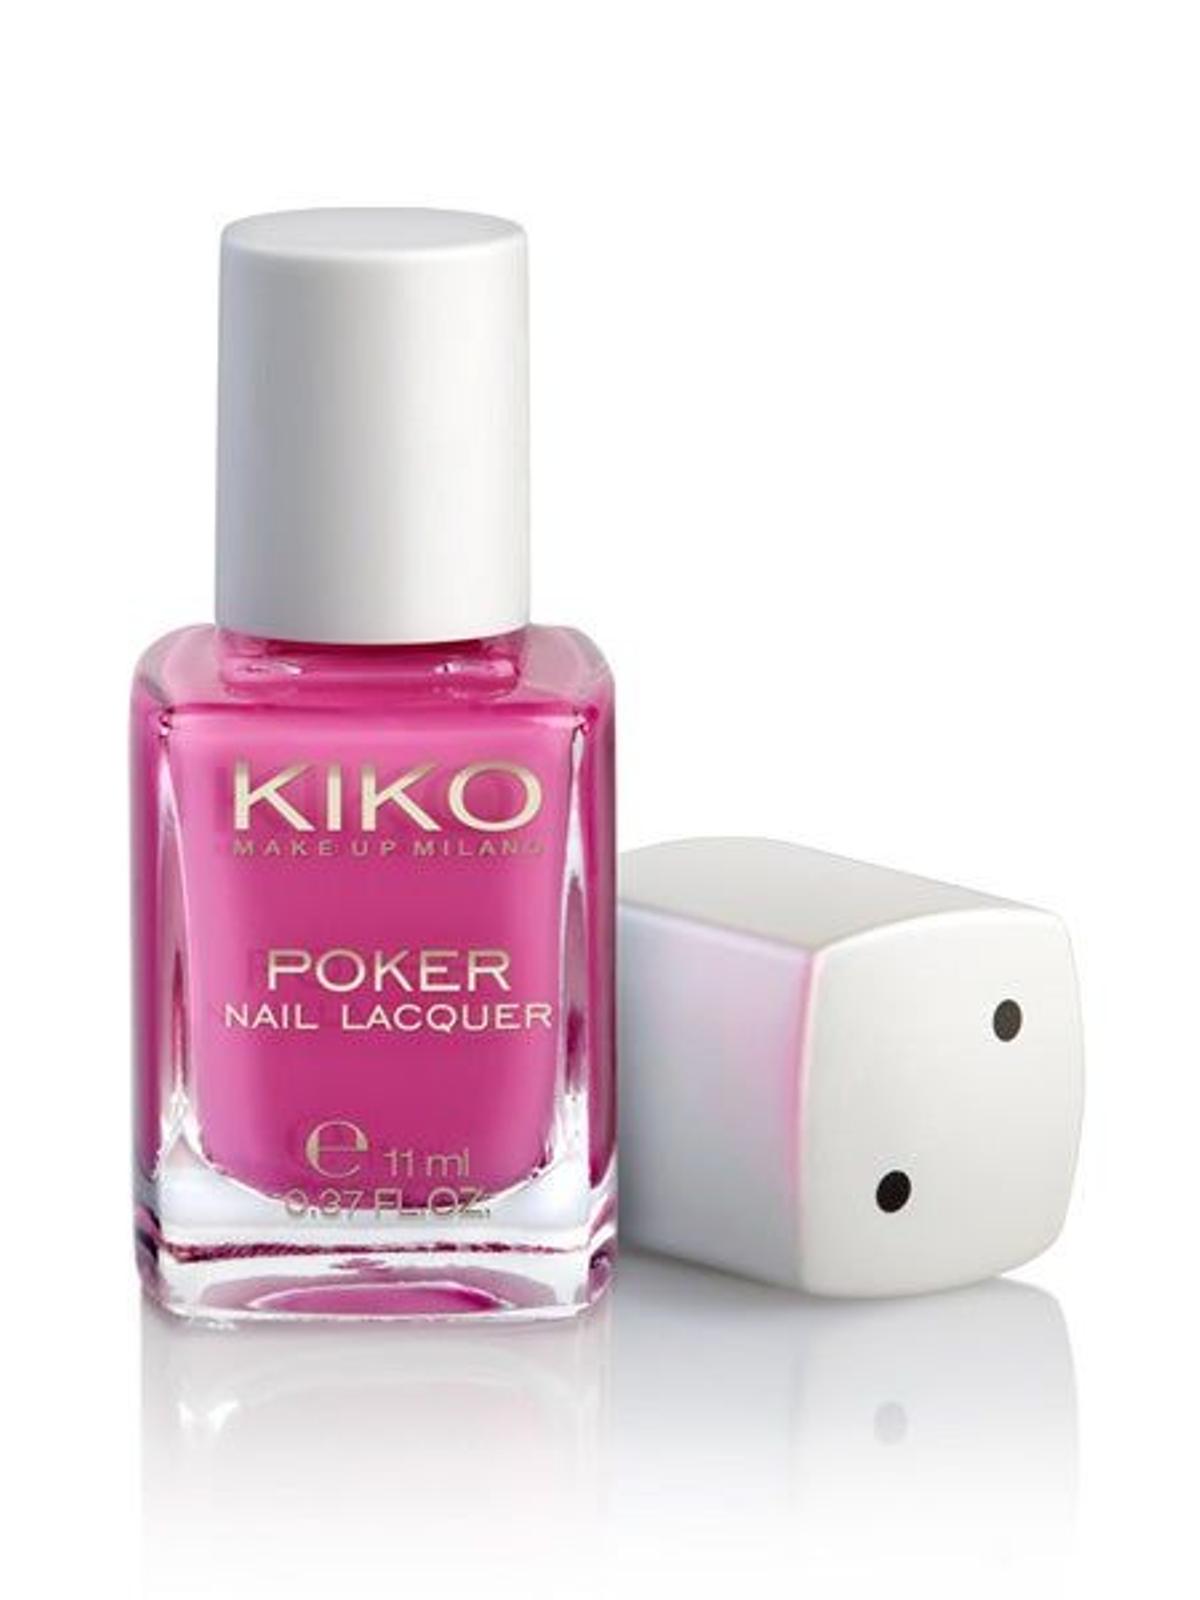 Esmalte Poker Nail Lacquer efecto gel de Kiko Cosmetics